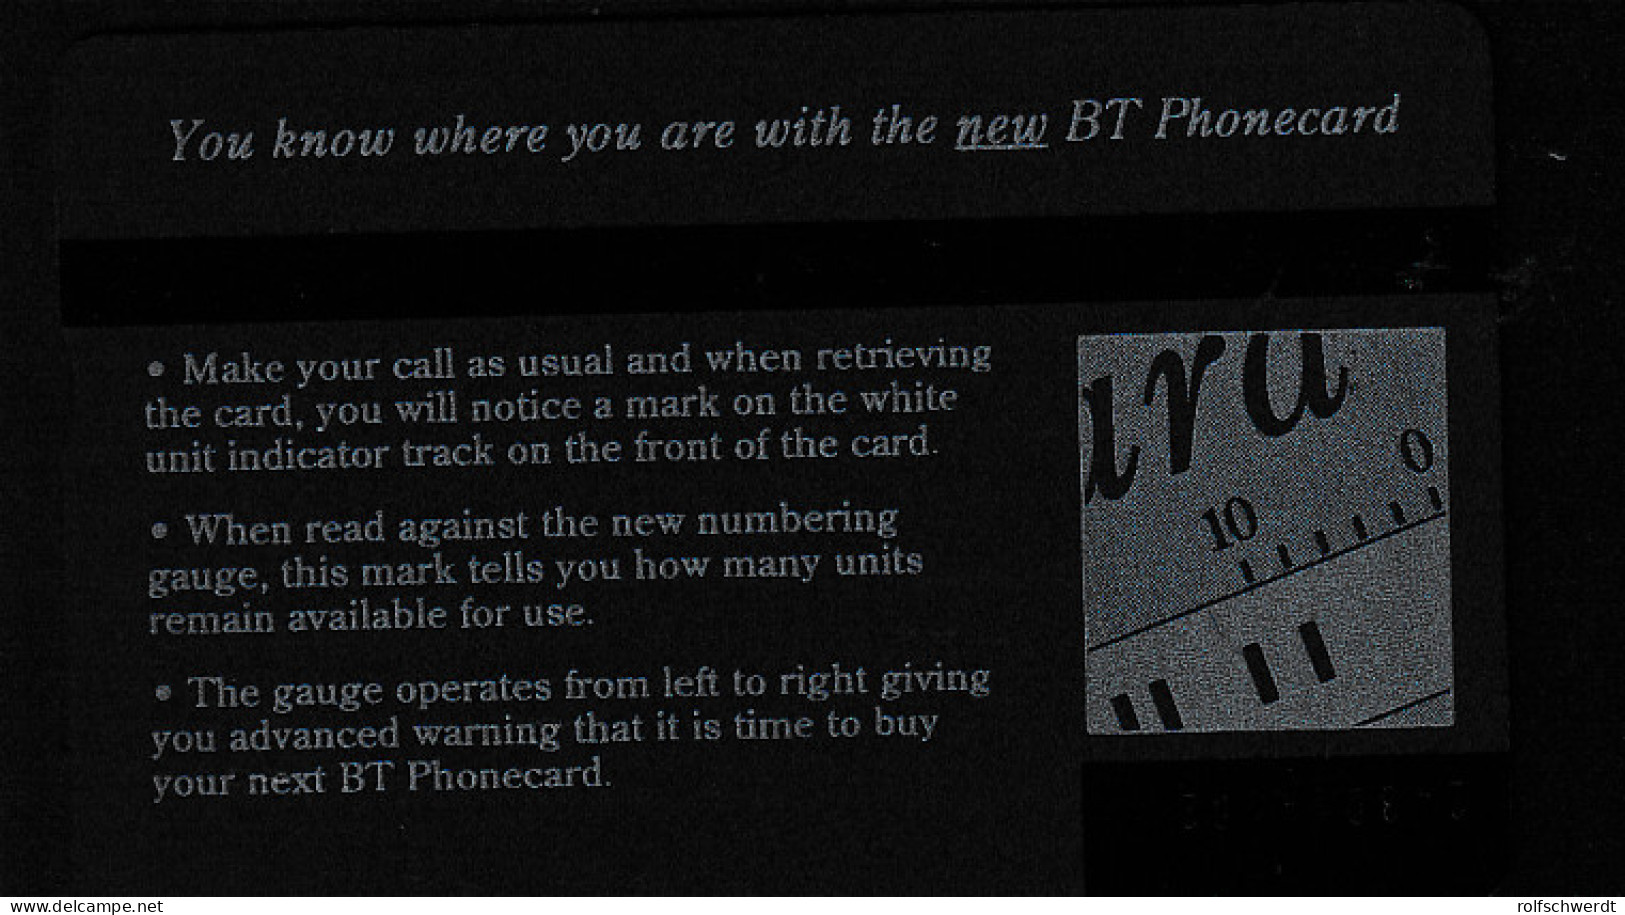 British Telekom Phonecard 40 Units - Unclassified